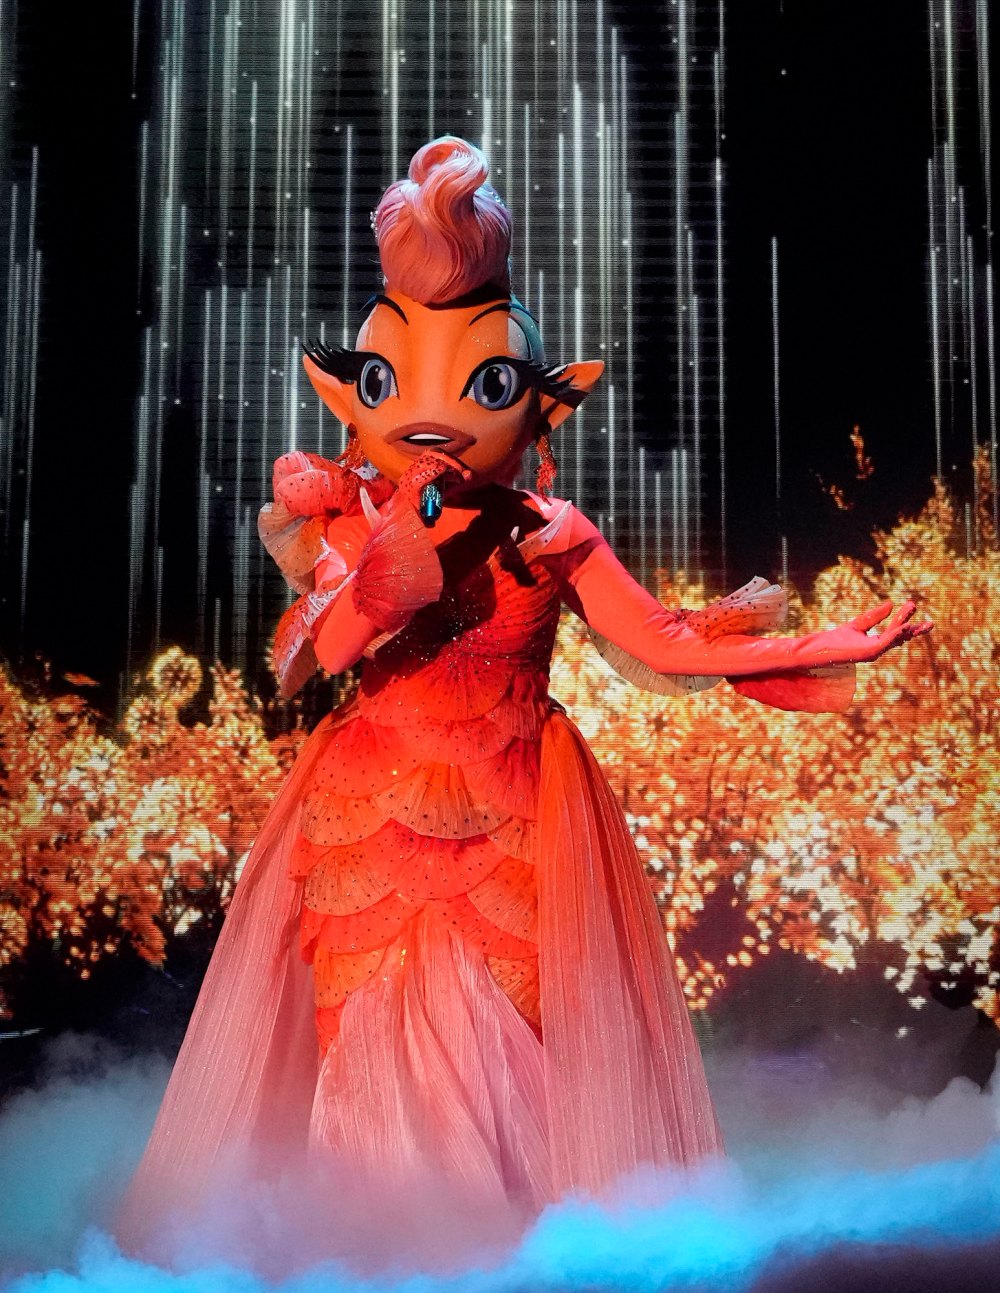 The masked singer's goldfish is released as the season 11 winner